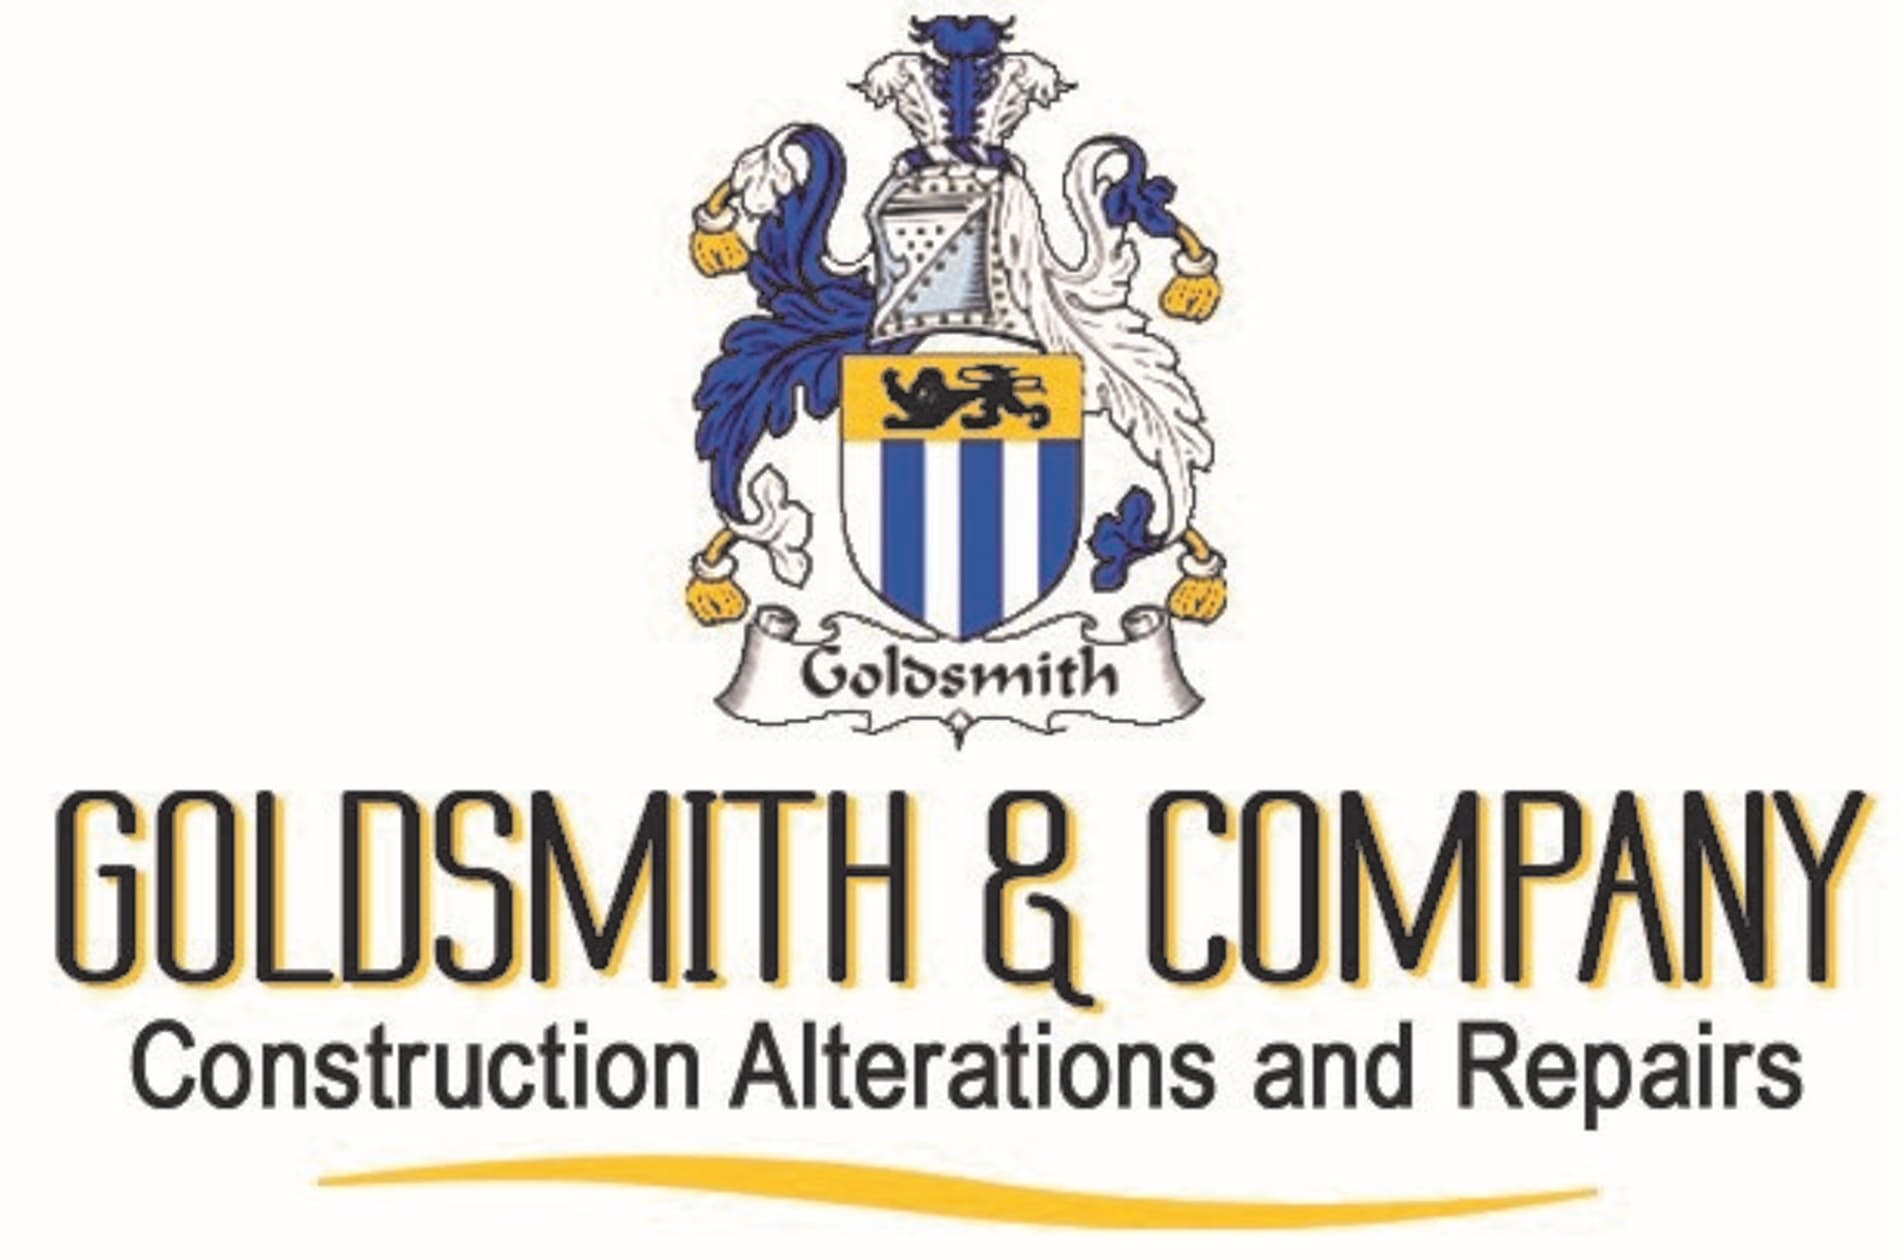 Goldsmith & Company Ltd